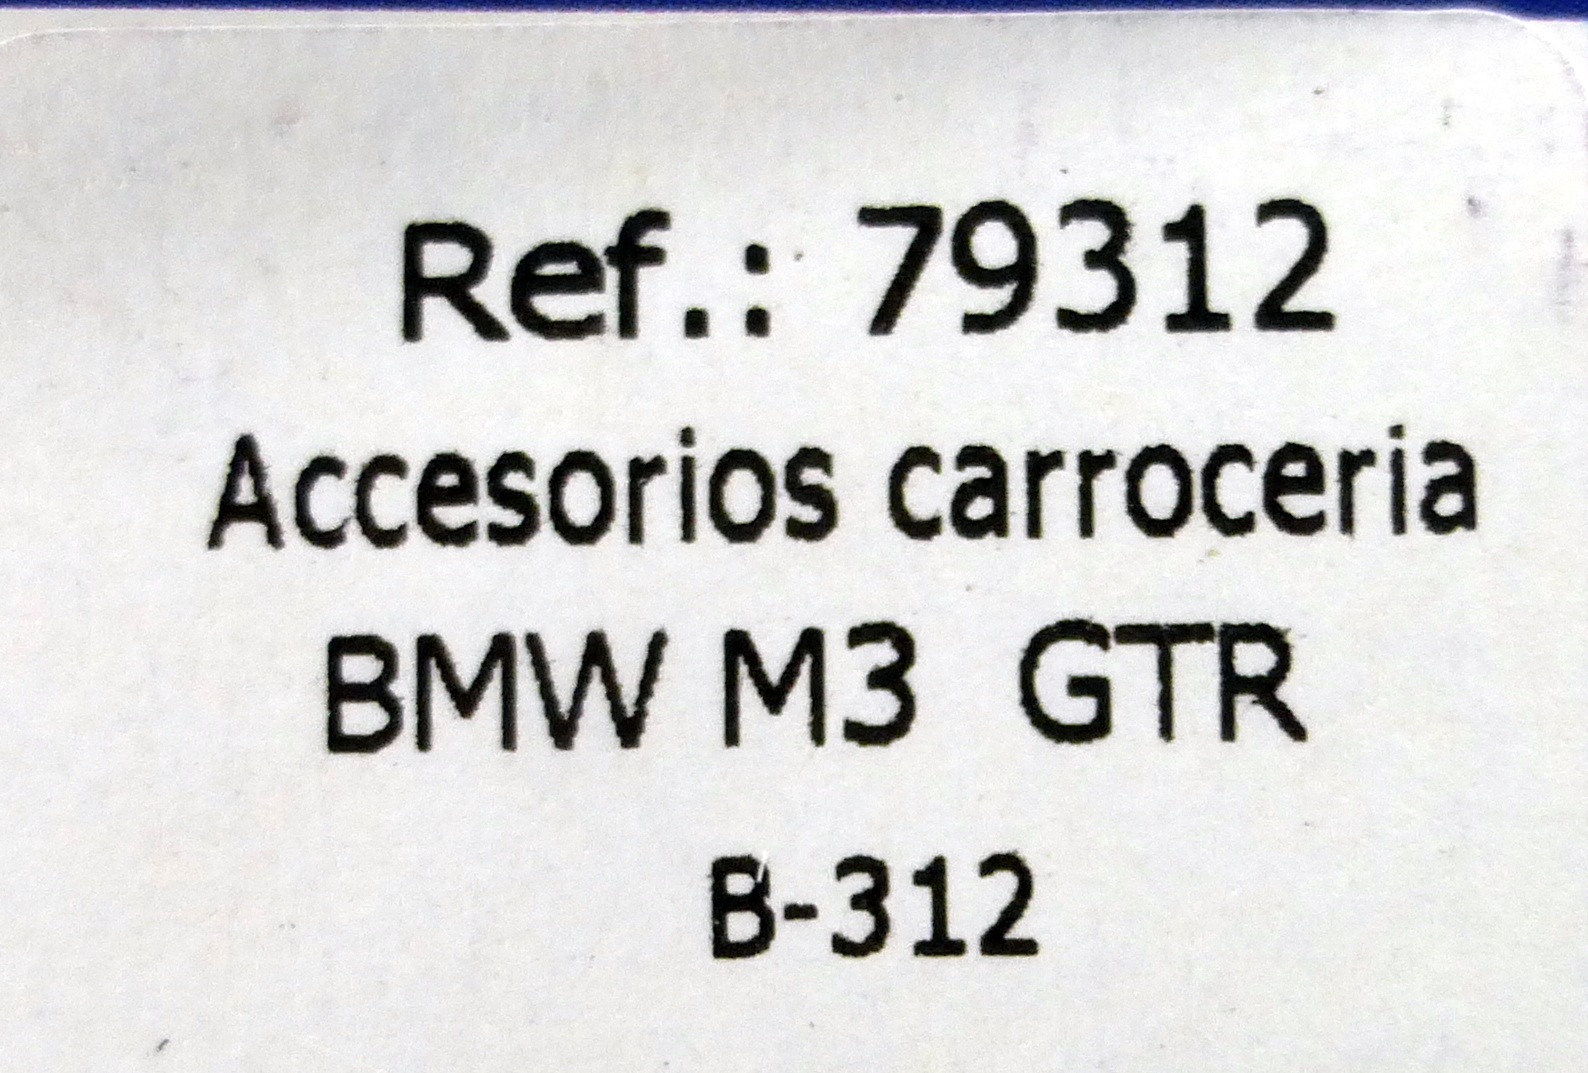 B-312 REF.79312 FLY ACCESORIOS CARROCERIA BMW M3 GTR .RETROVISORES EN BLANCO 